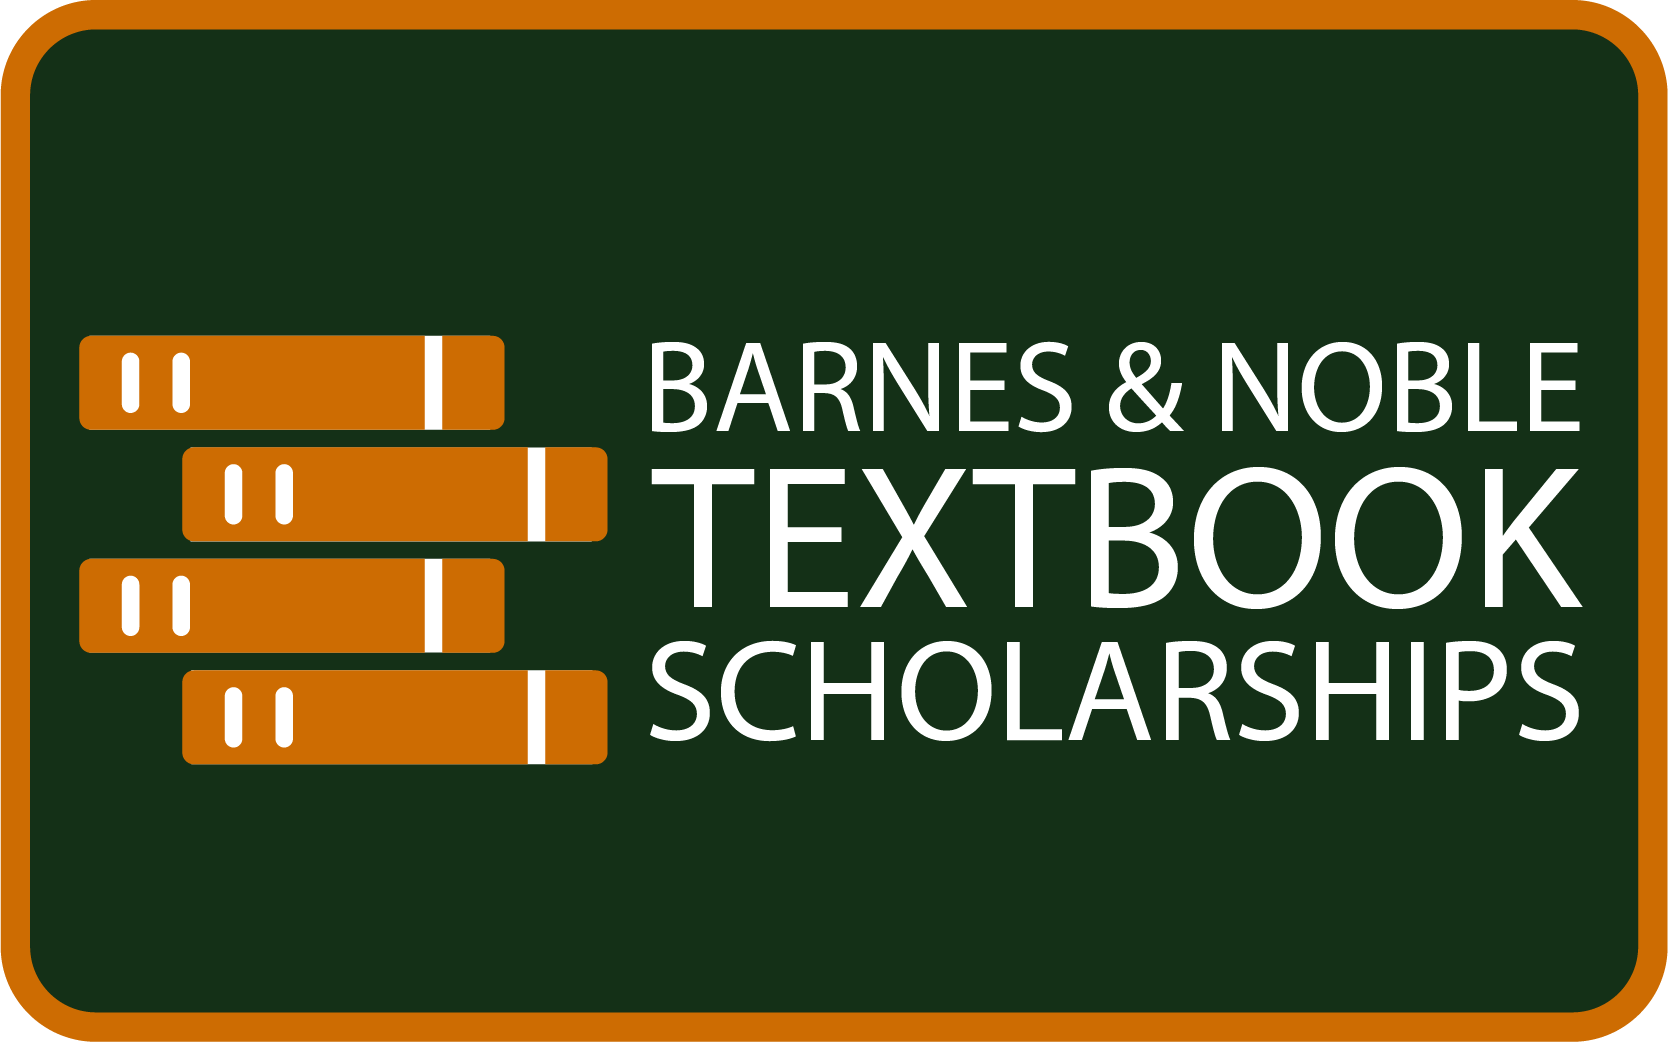 Barnes & Noble Textbook Scholarships